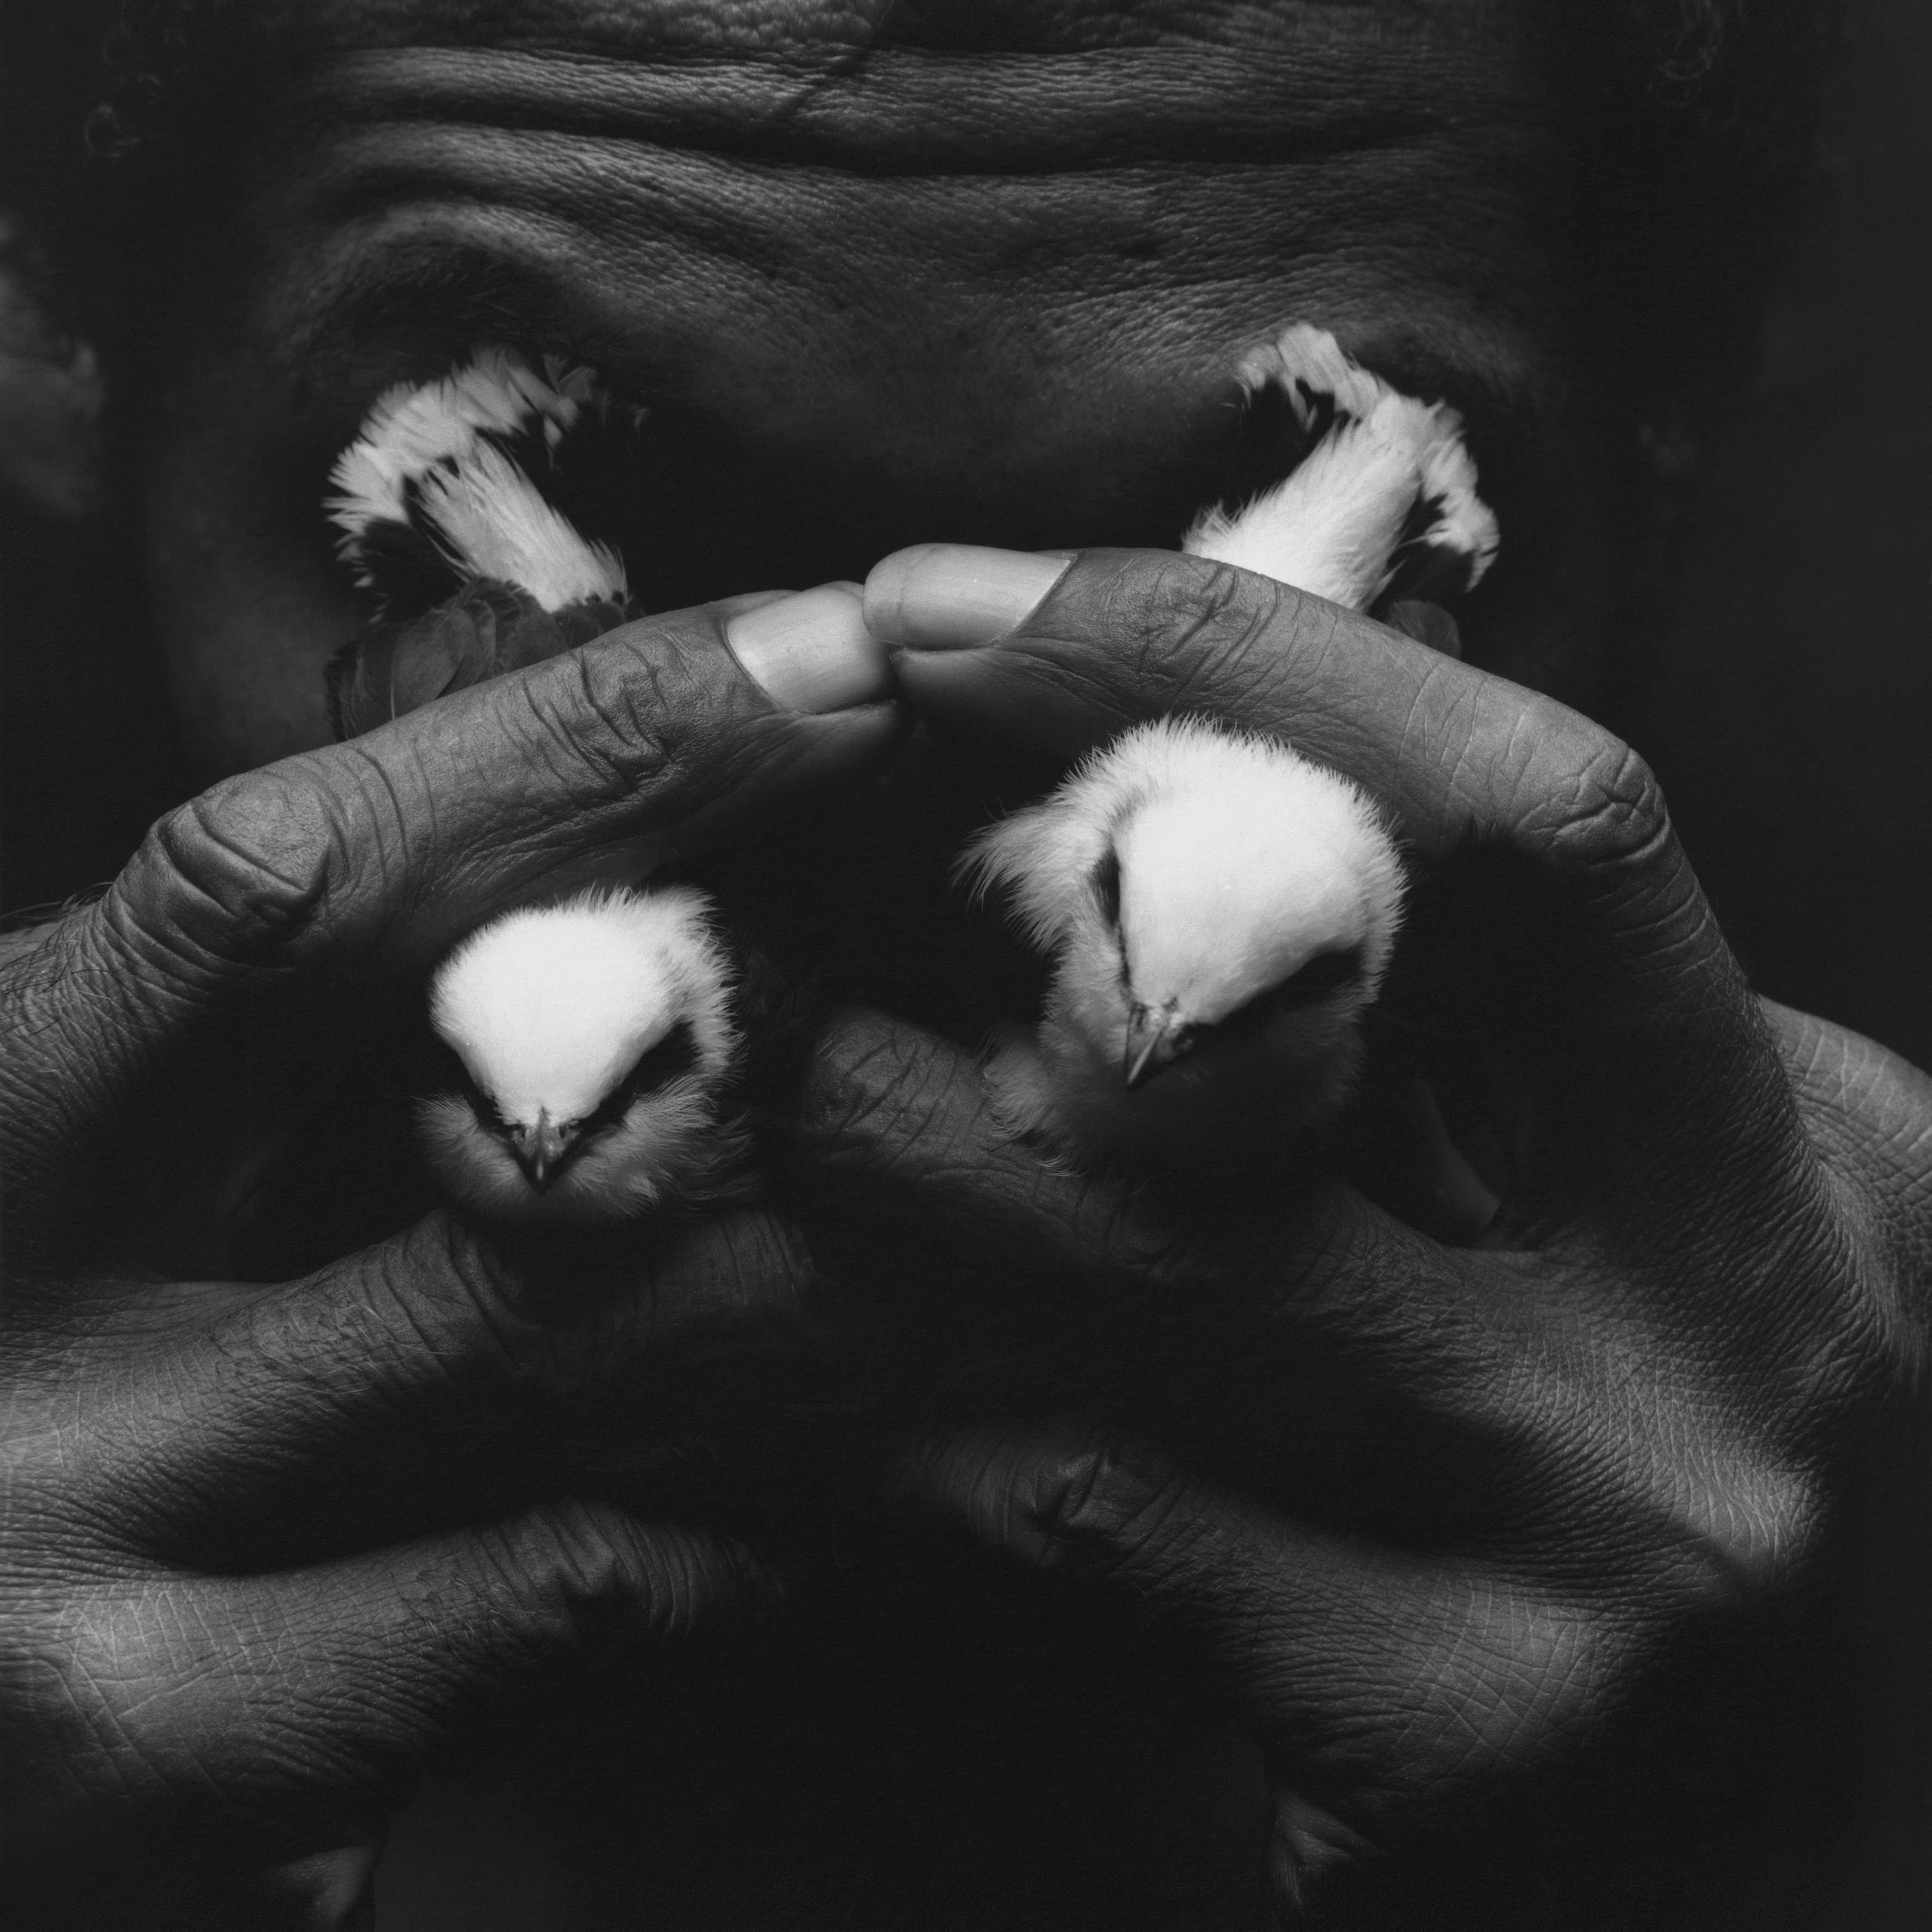 Homem com lagrimas de passaro, 1992 [Man with bird tears] © Instituto Mario Cravo Neto/Instituto Moreira Salles, courtesy of Daros Latinamerica Collection, Zürich